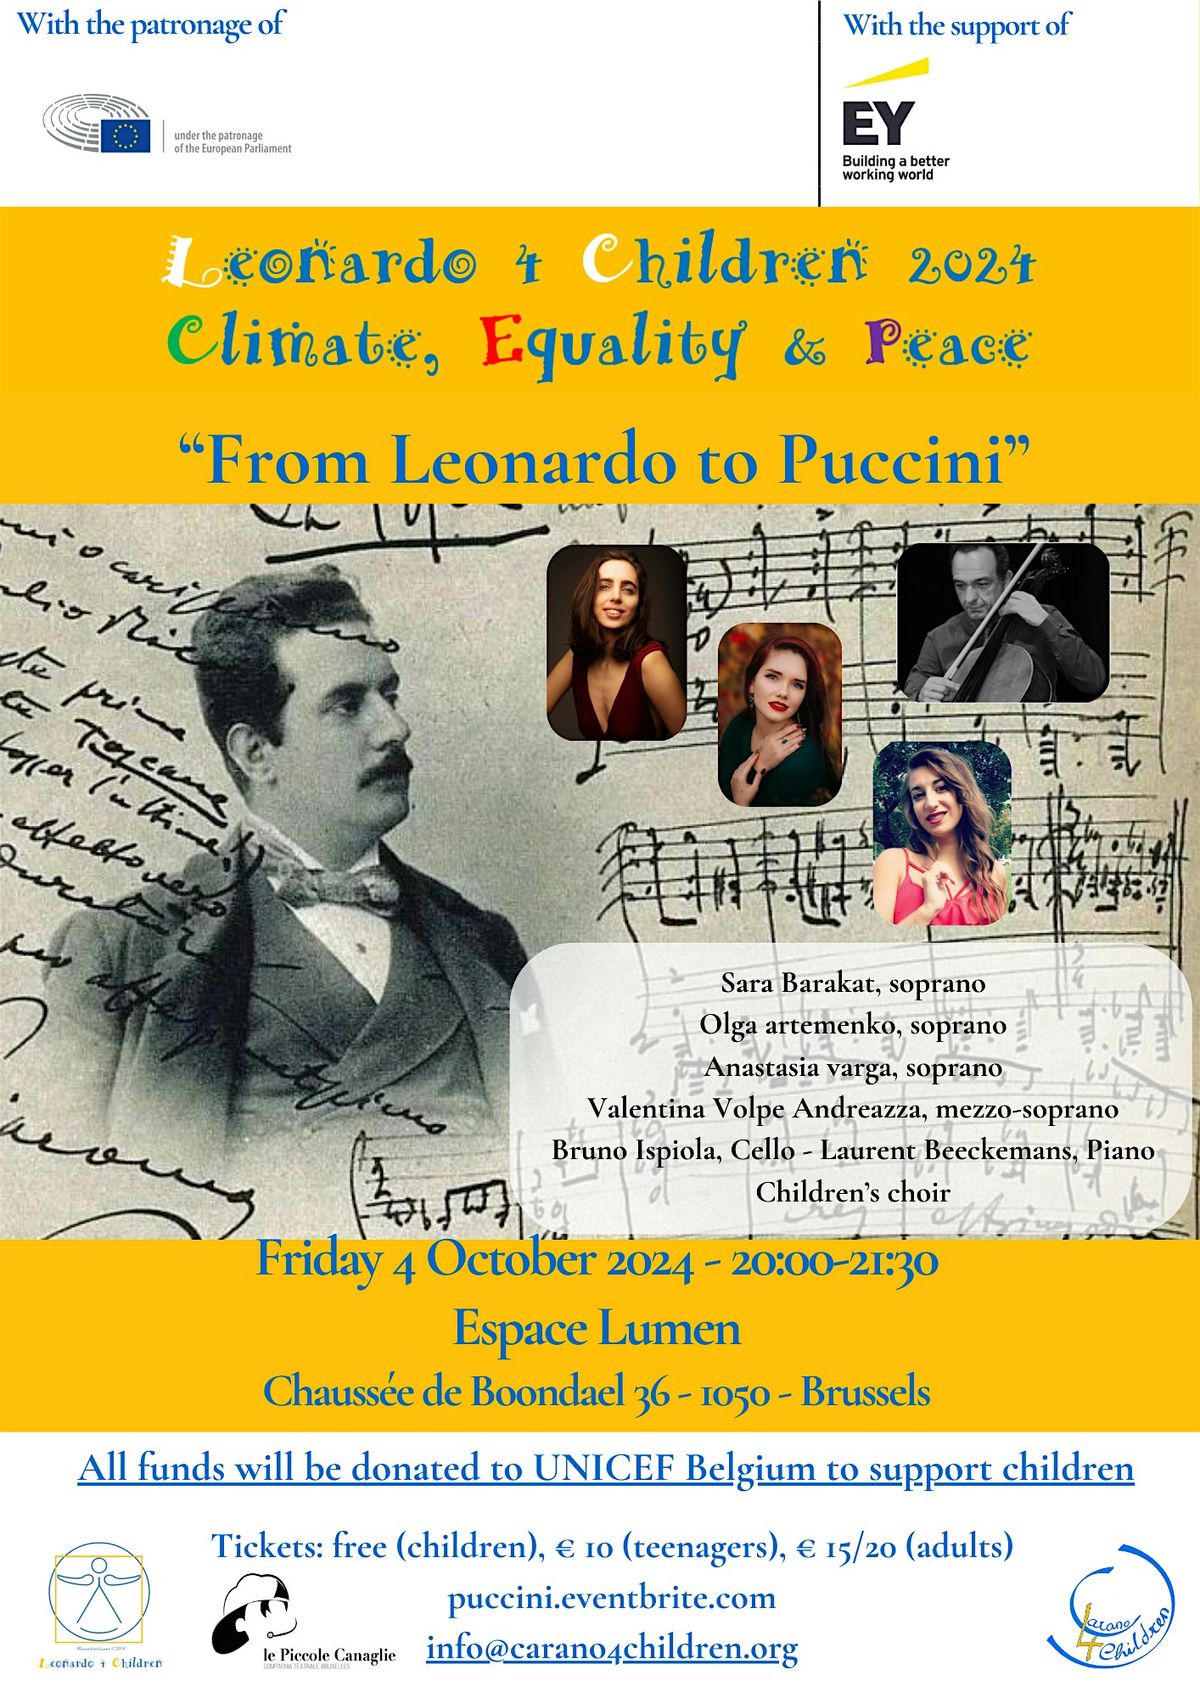 Leonardo 4 Children: from Leonardo to Puccini